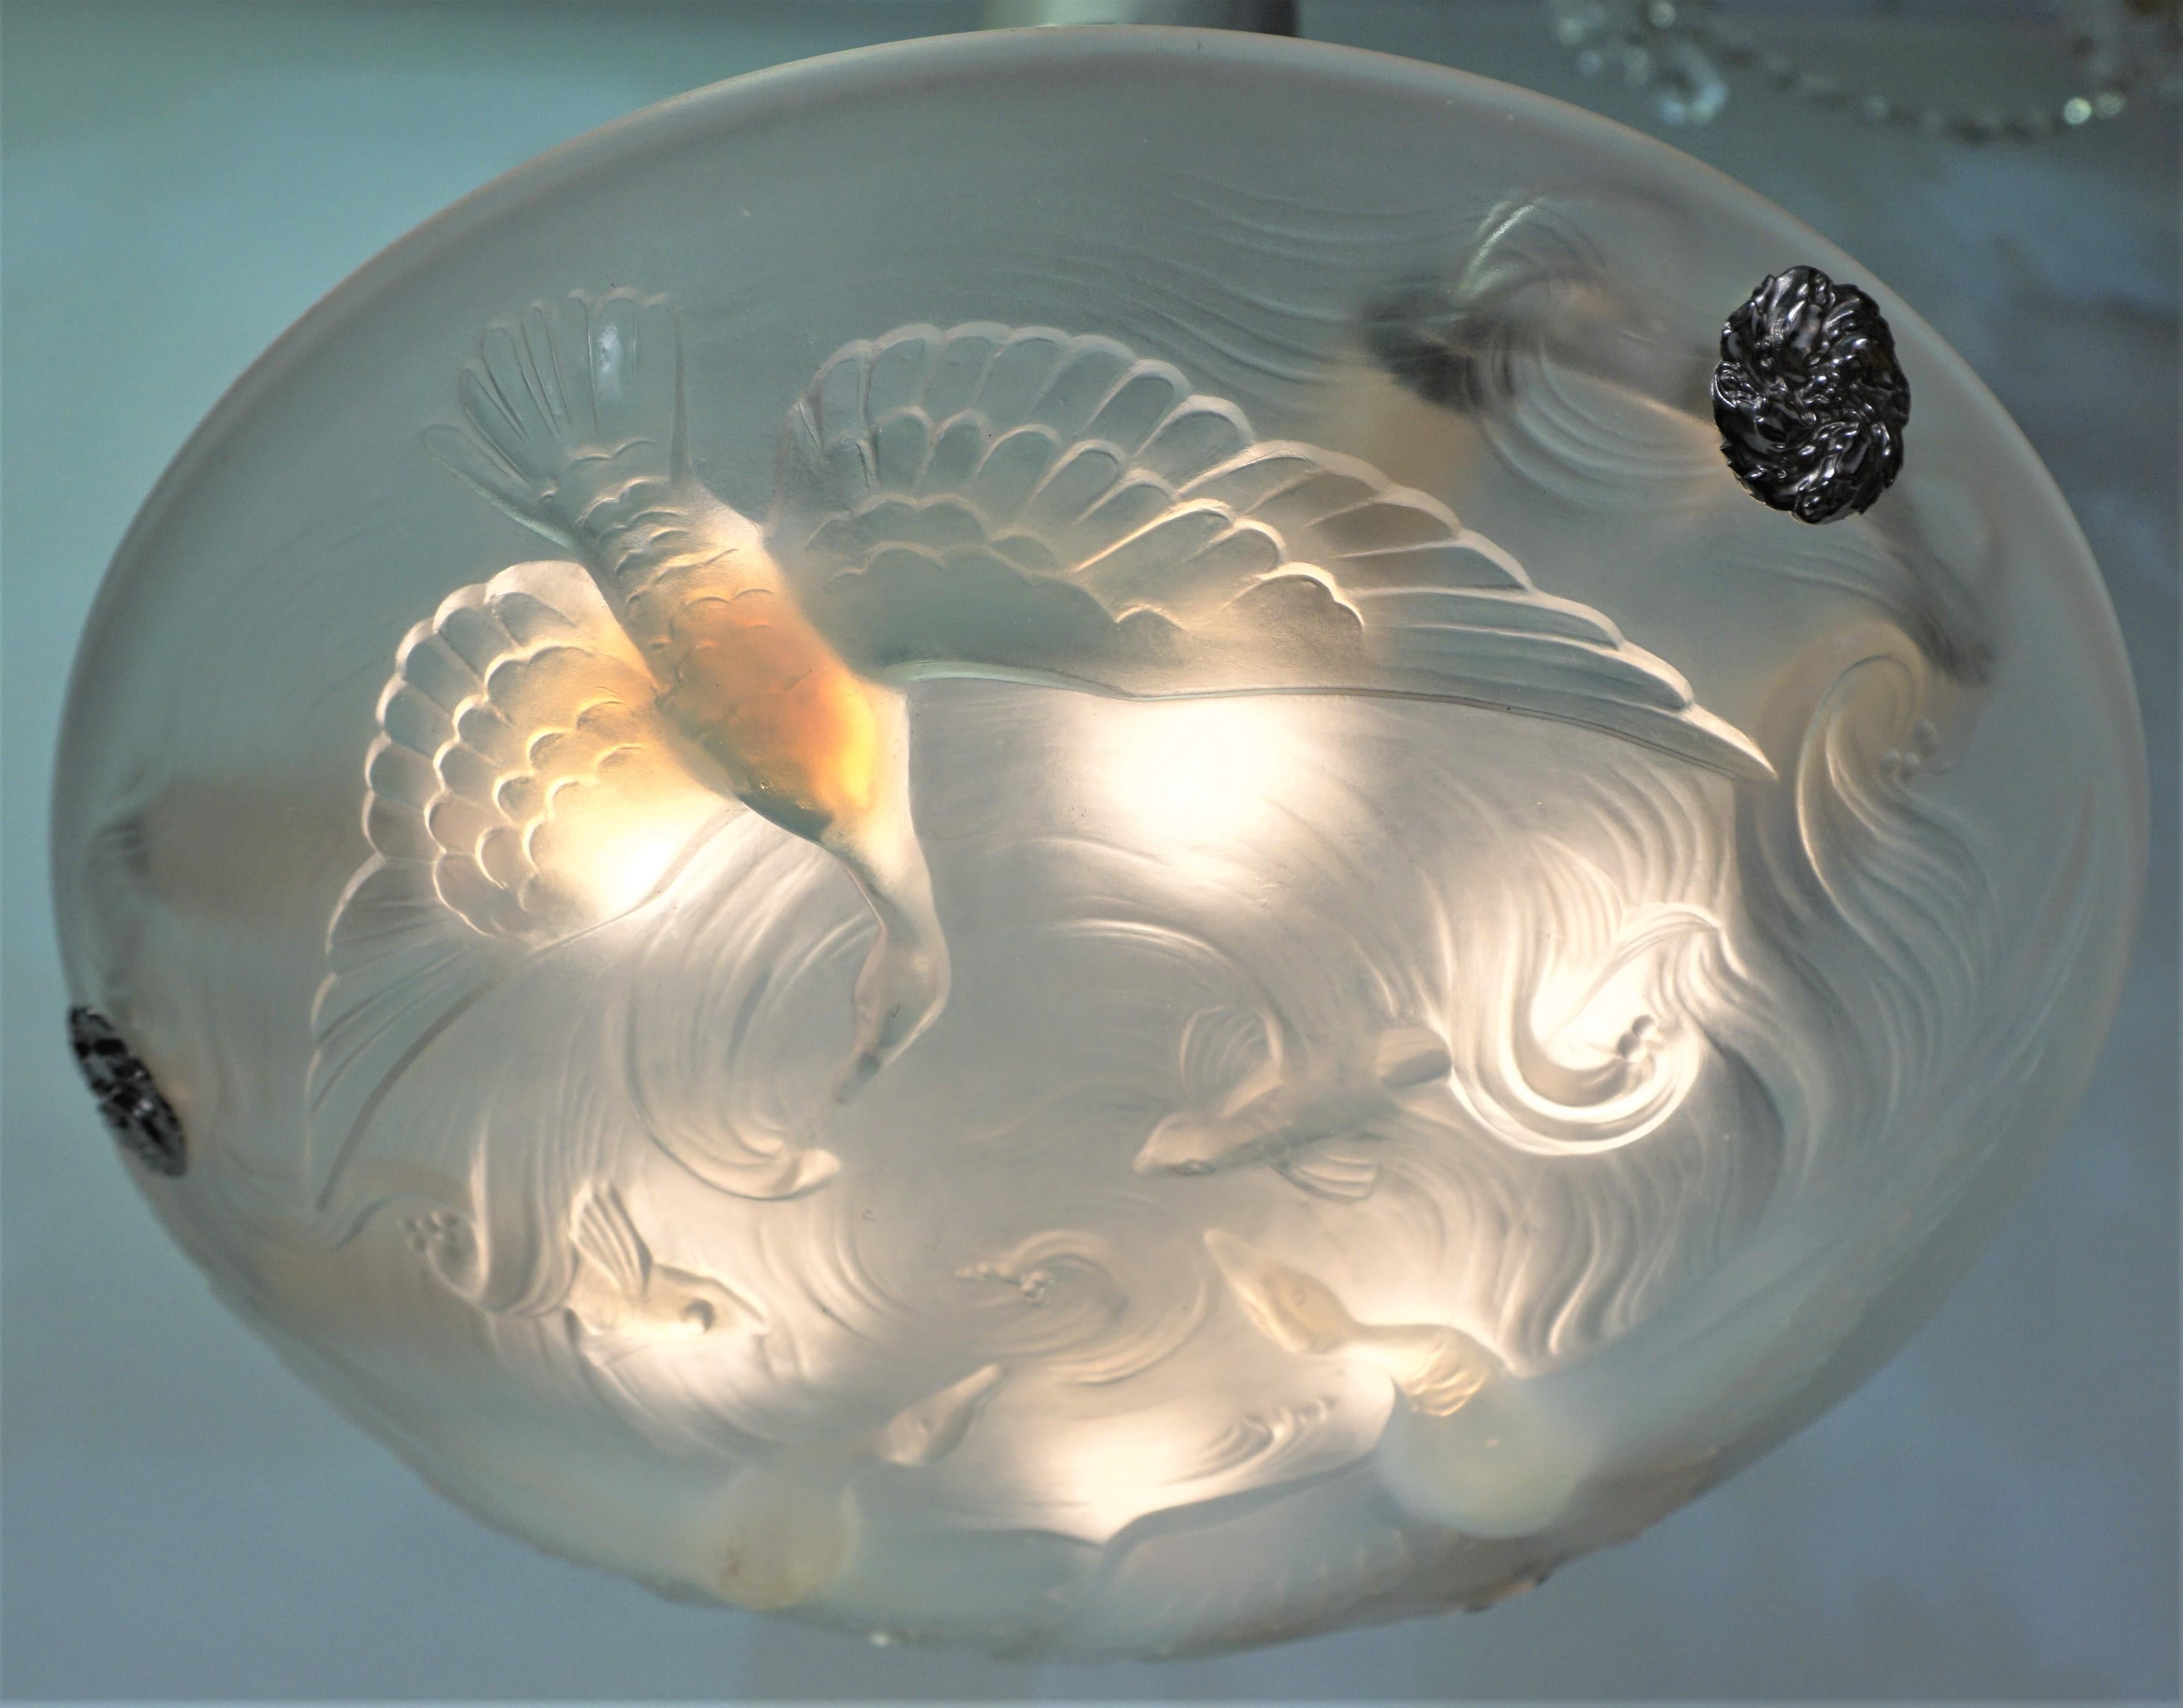 Beautiful Art Deco opalescent glass chandelier with nickel on bronze hardware.
Six lights 60 watts max each.